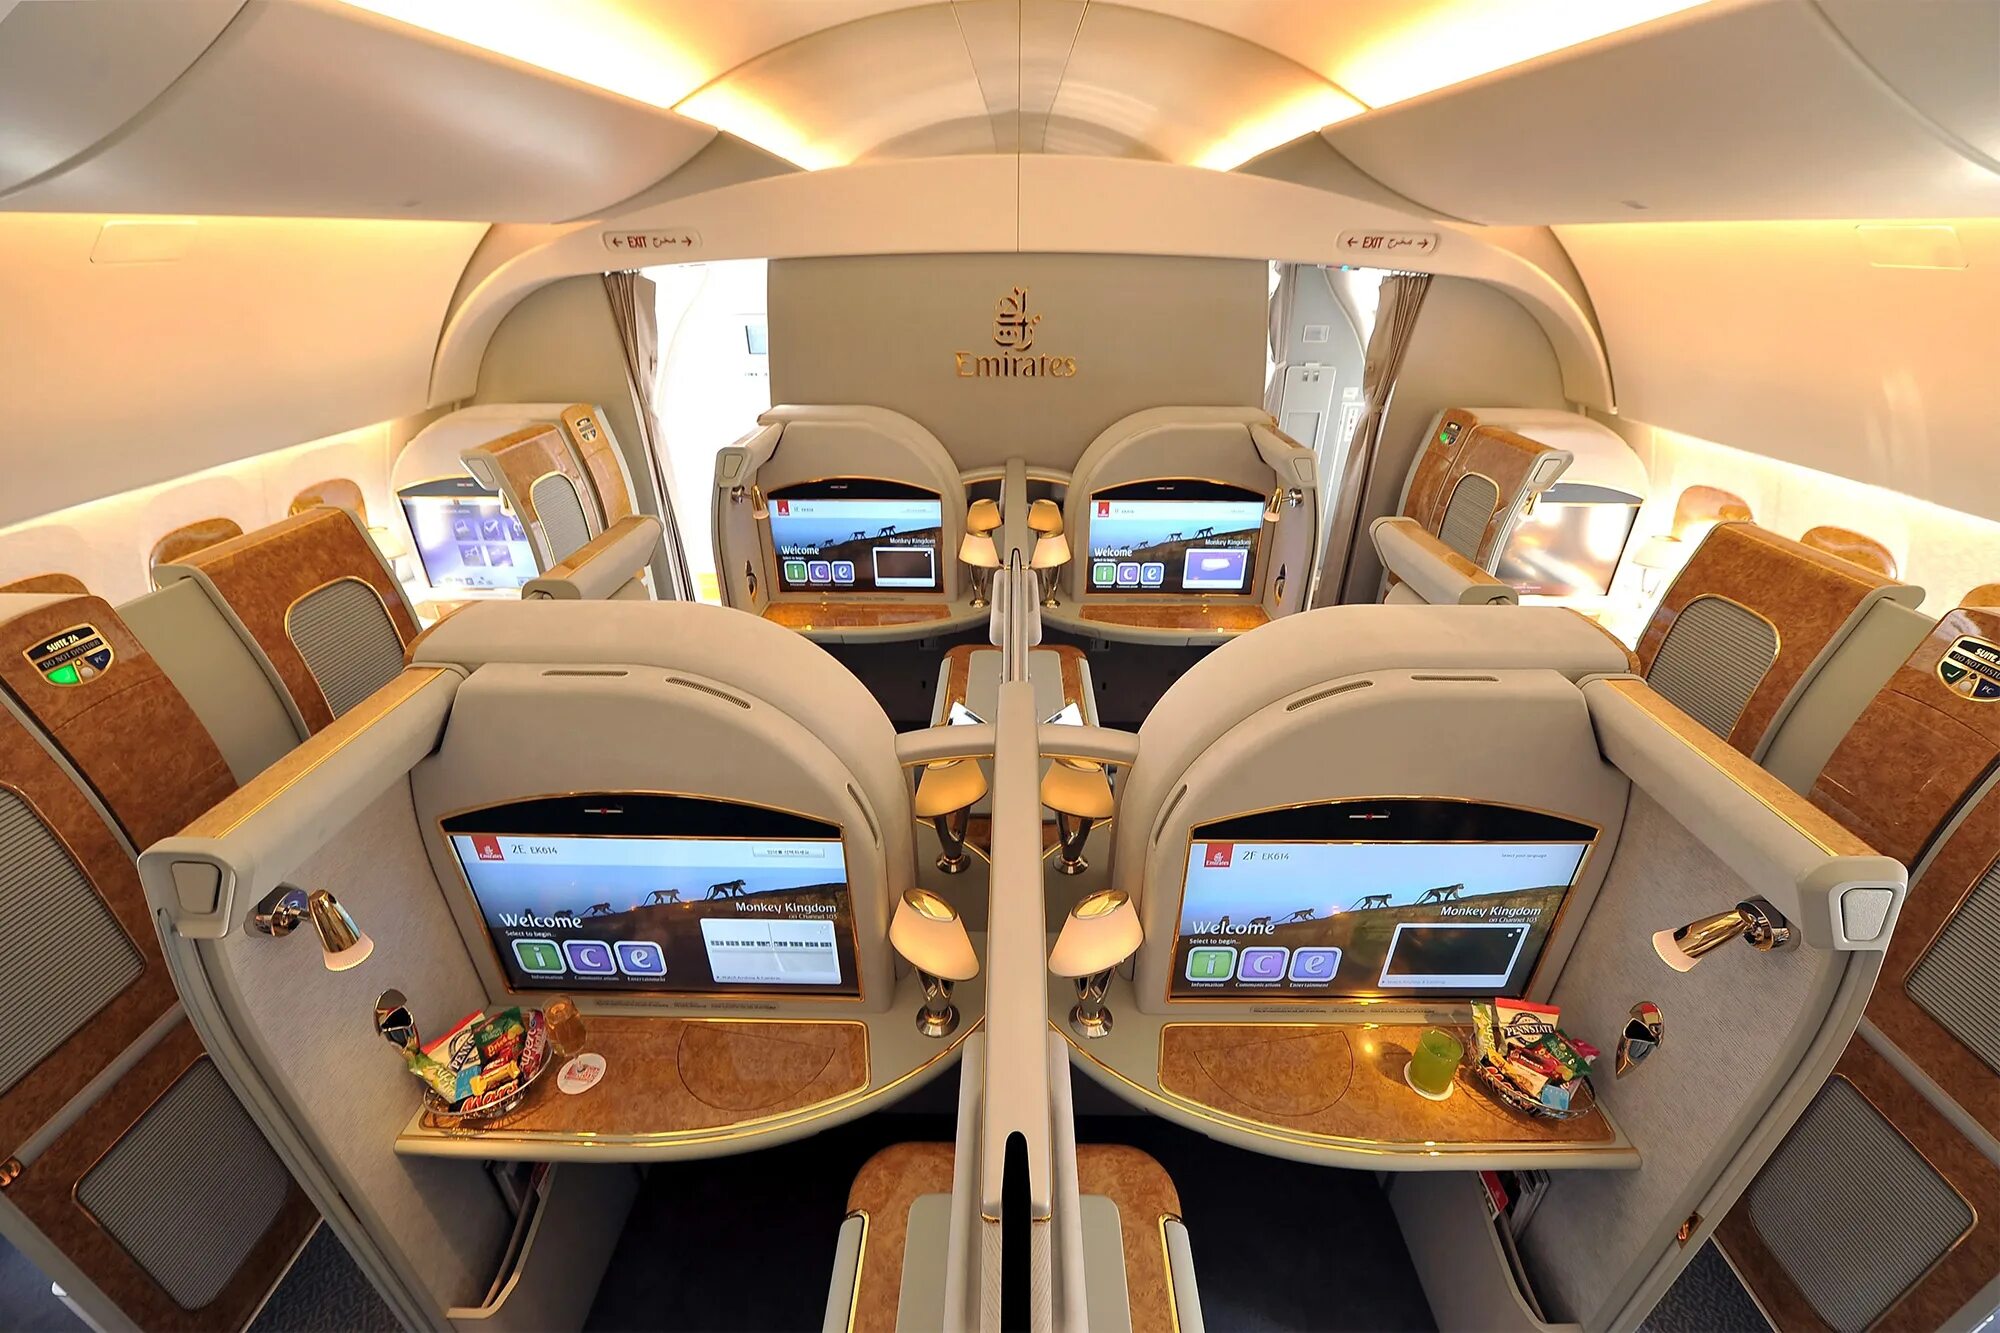 Airbus a380 Emirates первый класс. Самолет Emirates a380 салон. Airbus a380 Emirates салон. Первый класс Emirates a380.